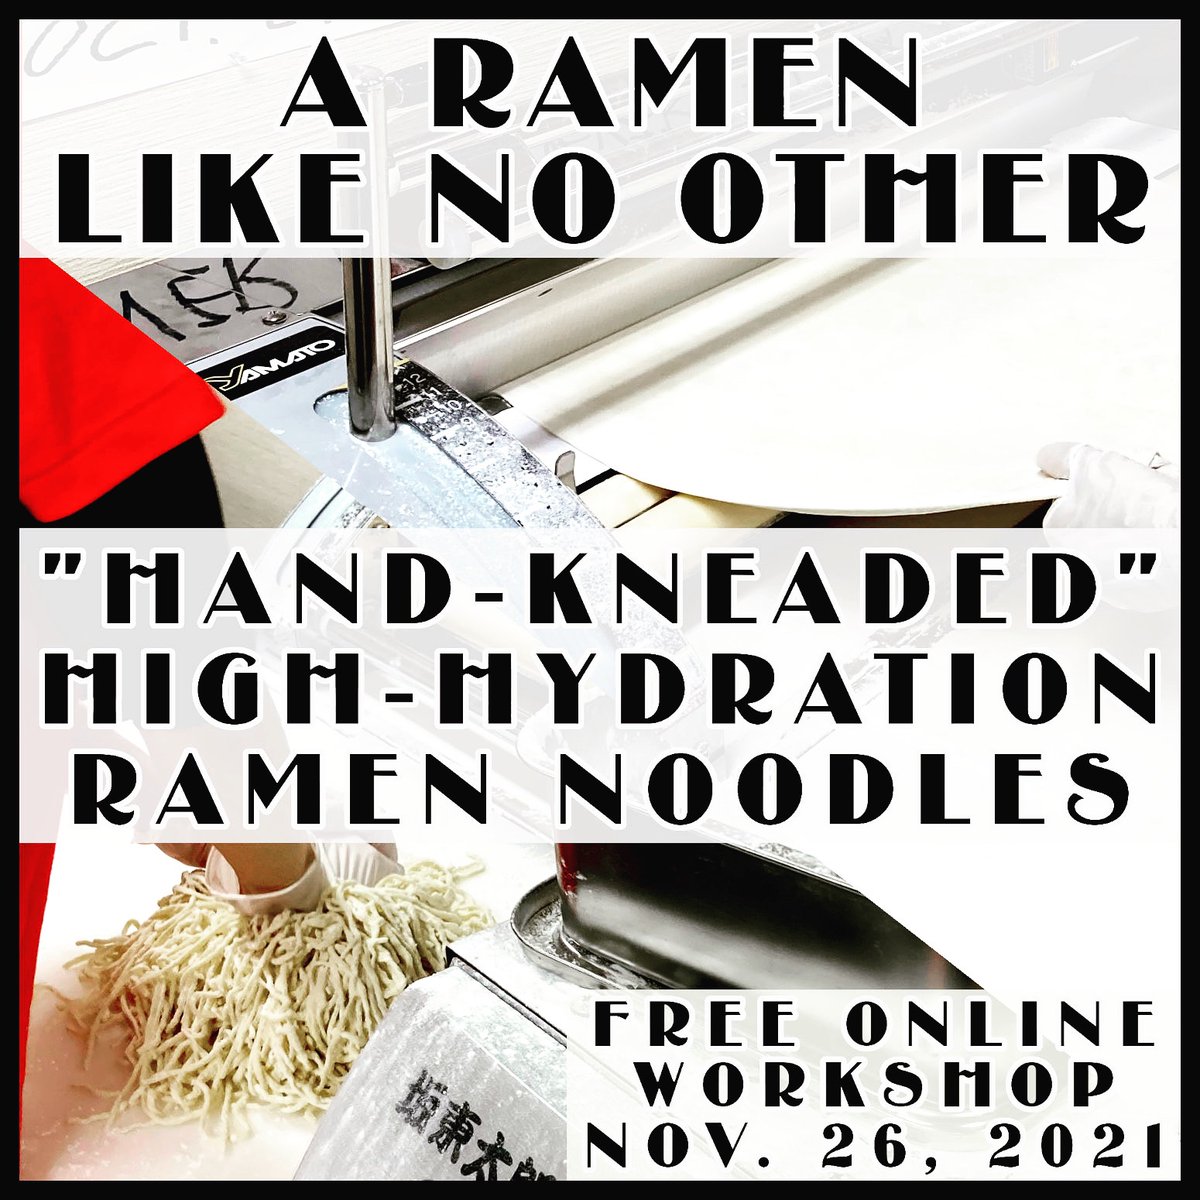 Online workshop (November 26, 2021). A Ramen like no other – “hand-kneaded” high-hydration Ramen